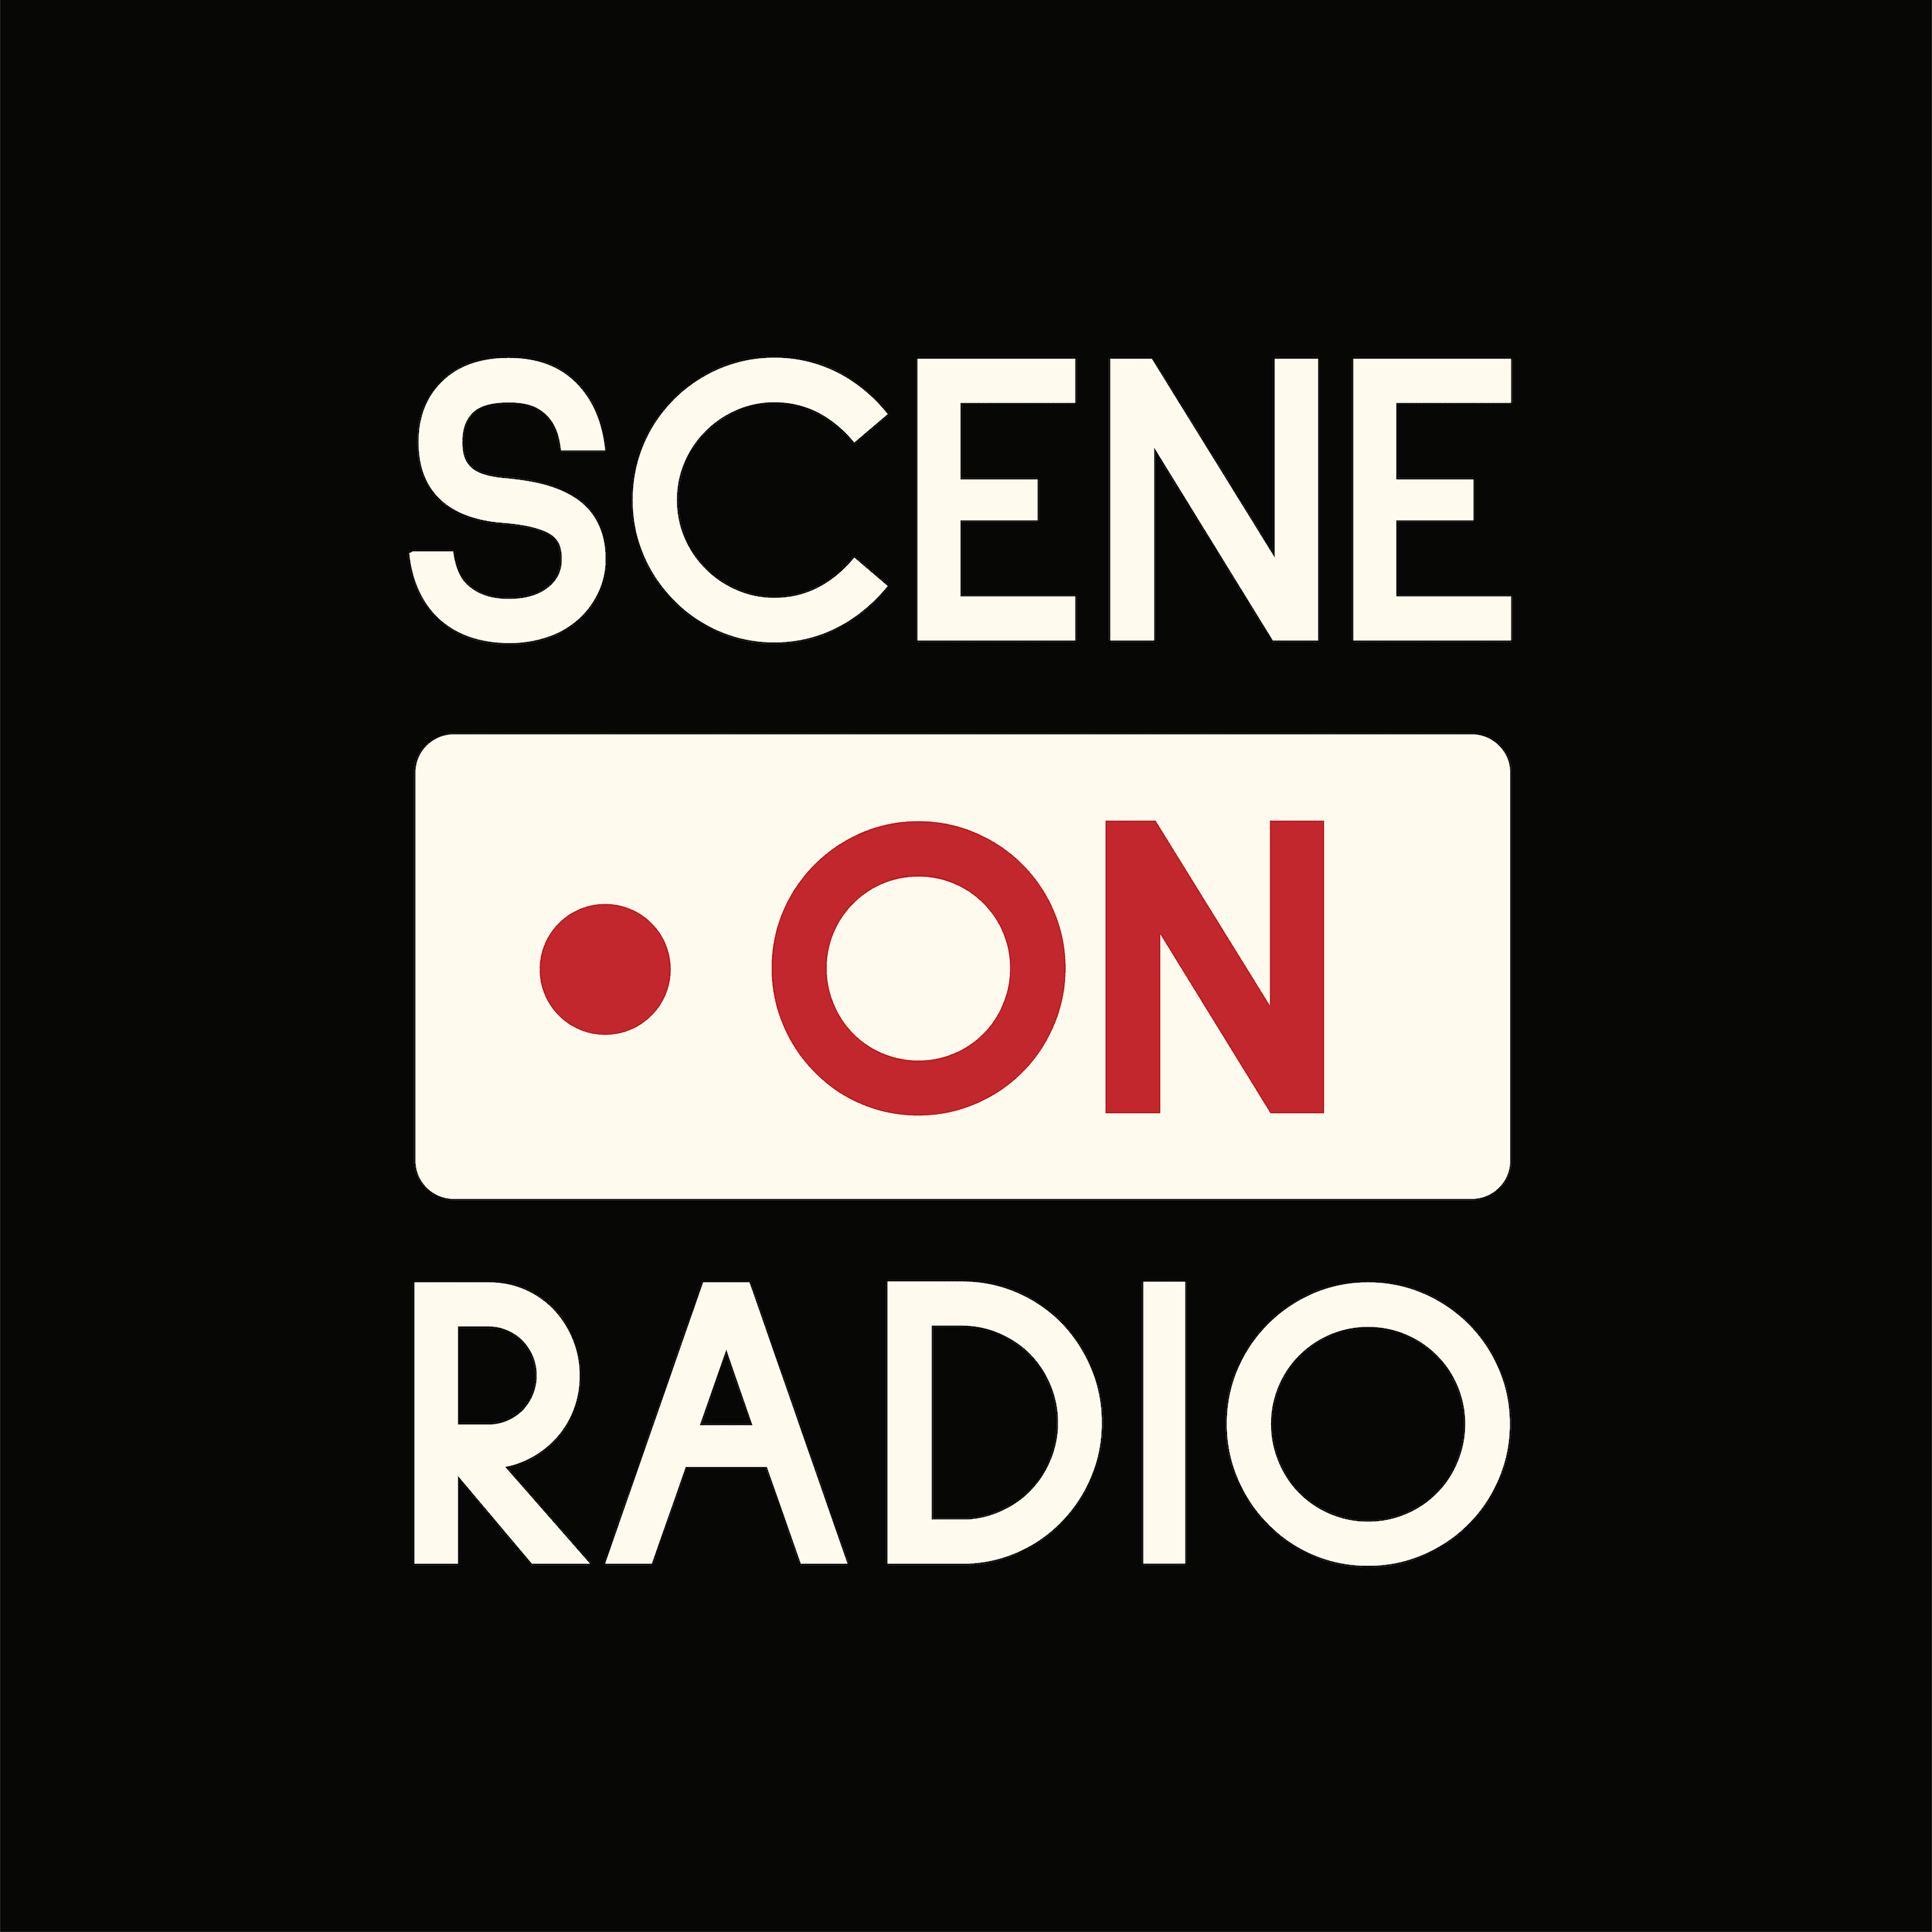 Thumbnail for "Update: Scene on Radio status report ".